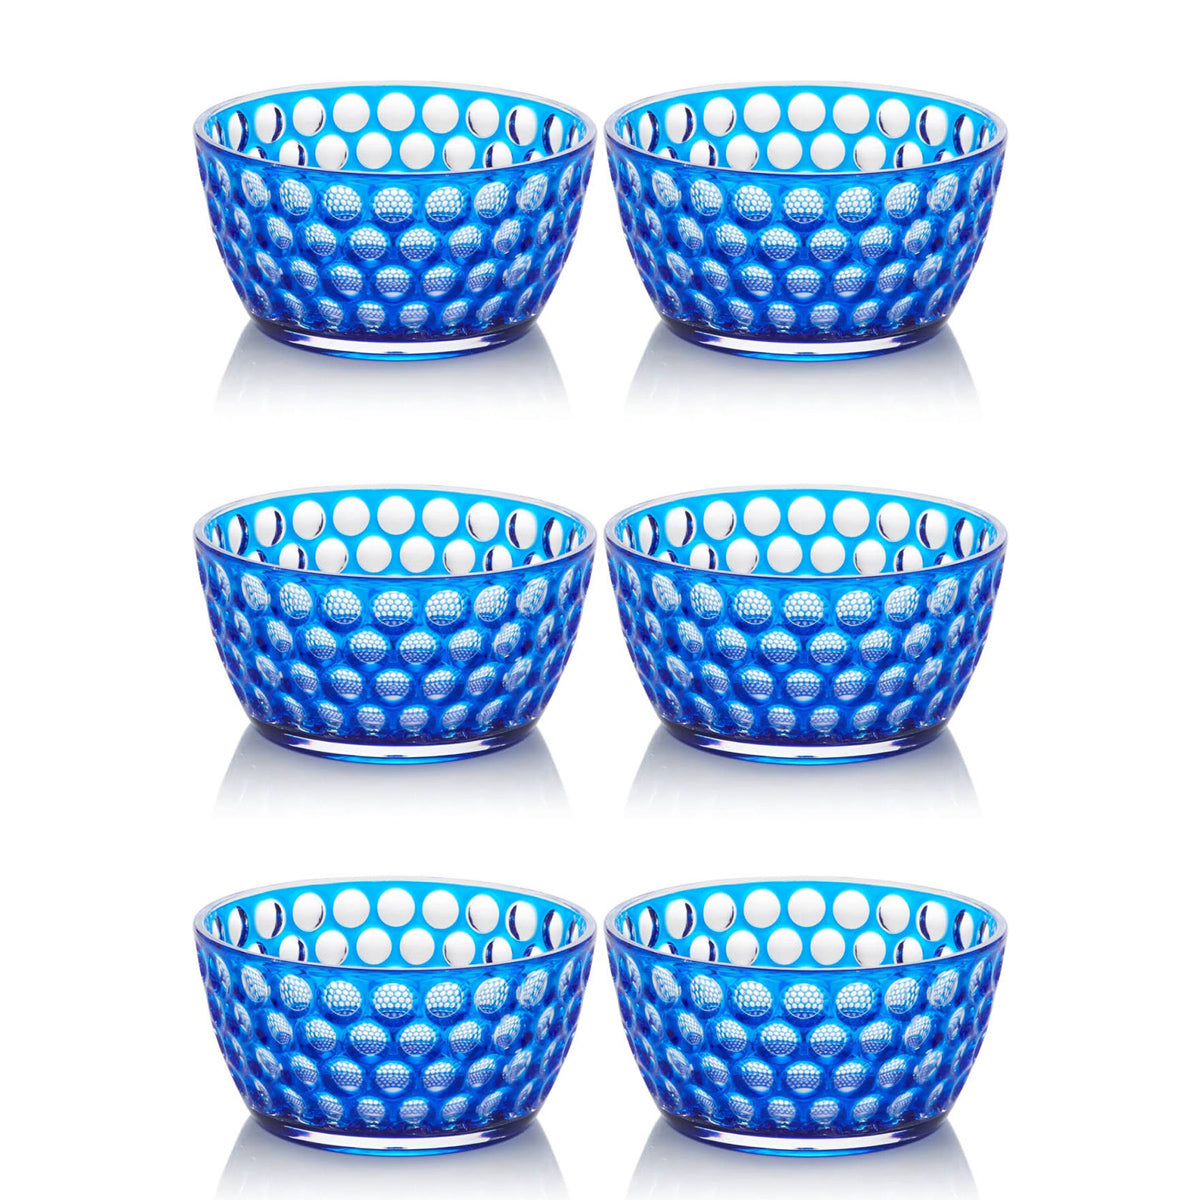 Lente Snack/Cereal Bowl in Royal Blue or White - Set of 6